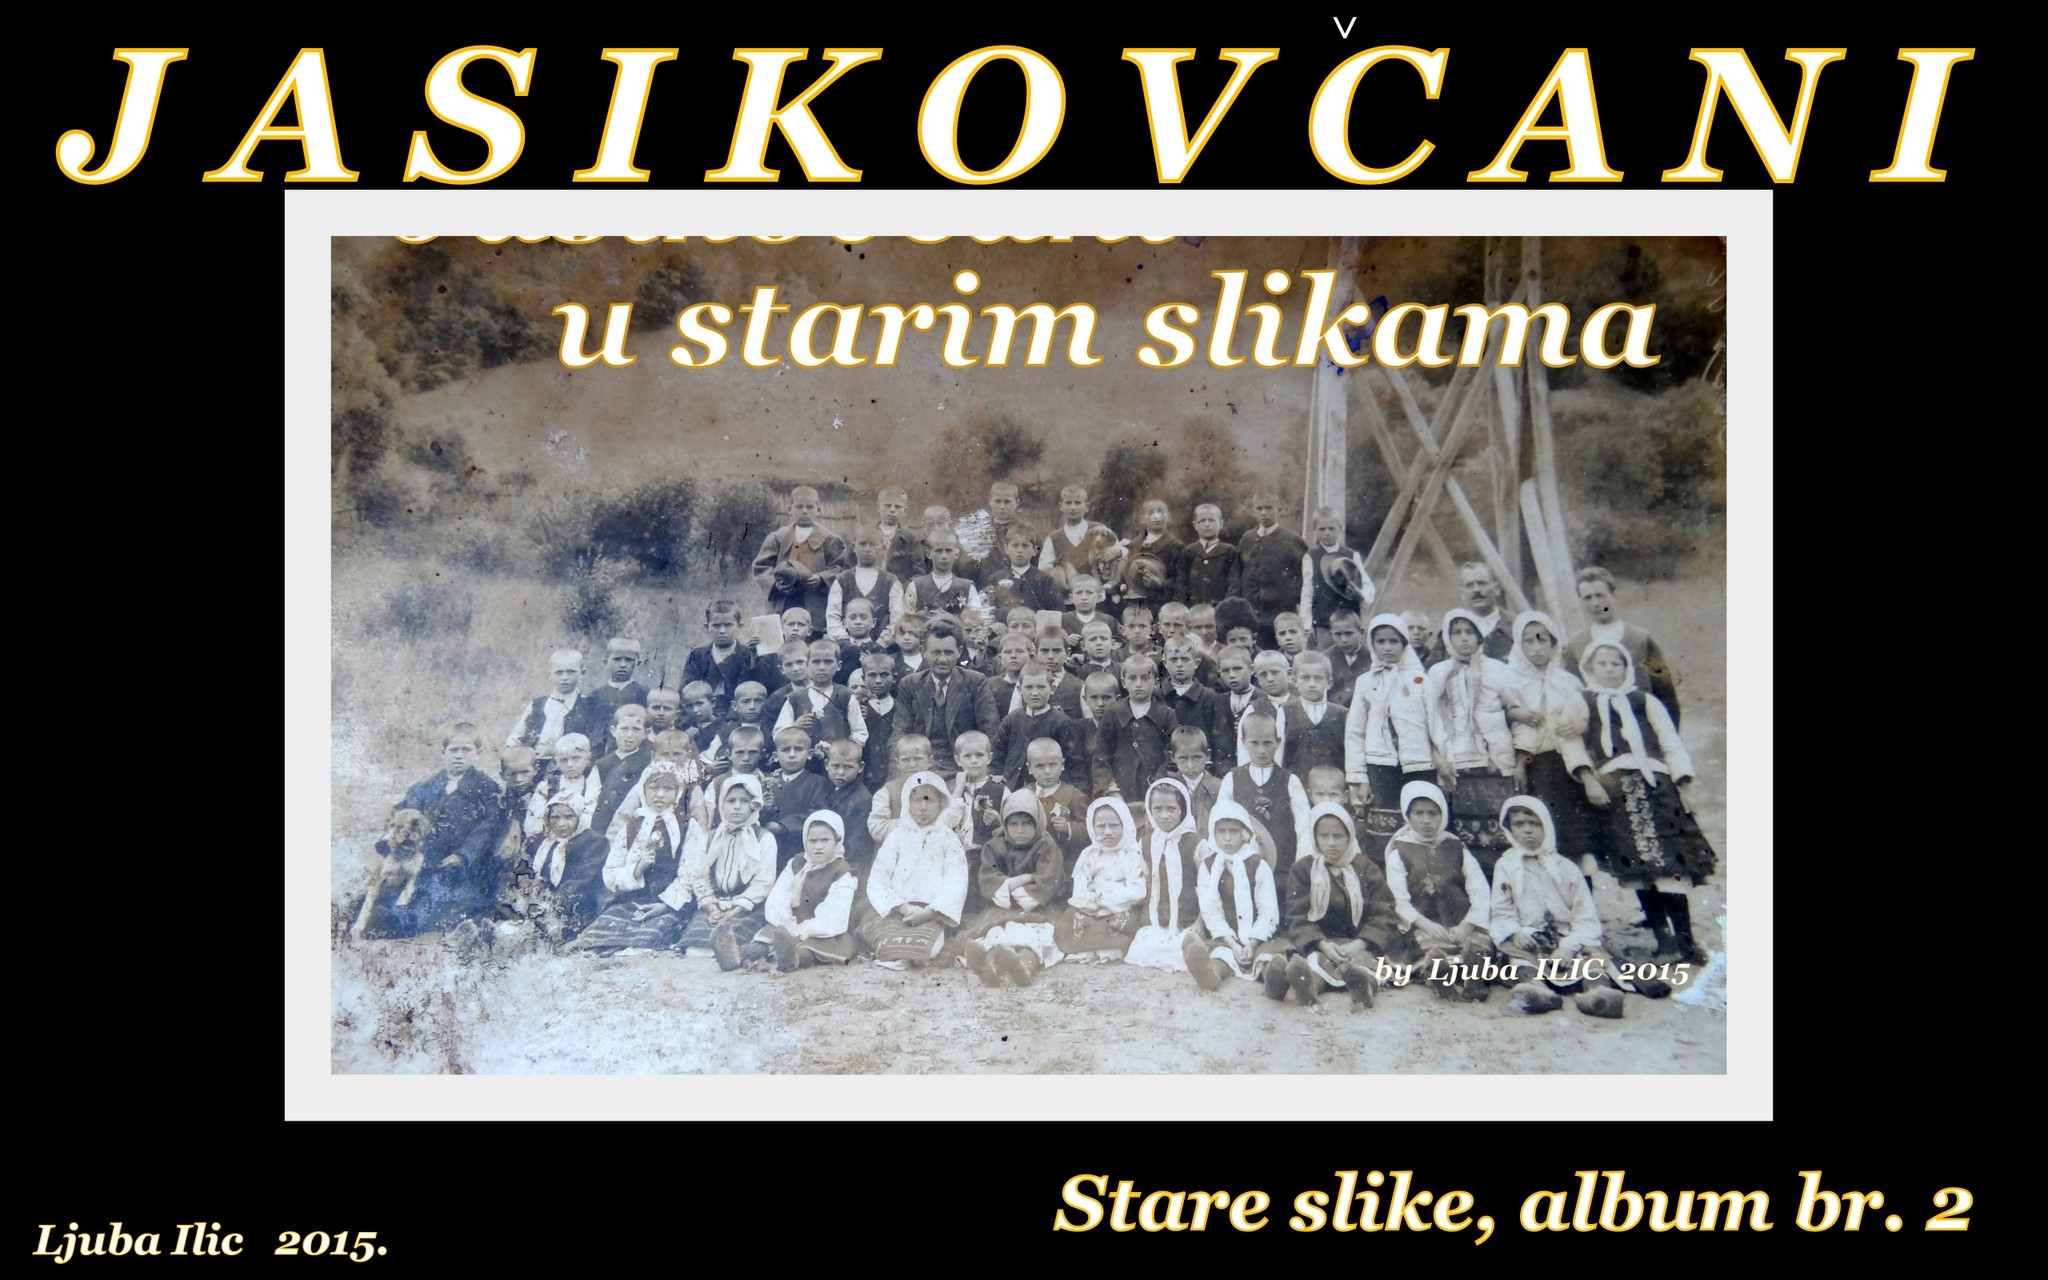 People Of Jasikovo In Old Photos - Jasikovcani U Starim Slikama